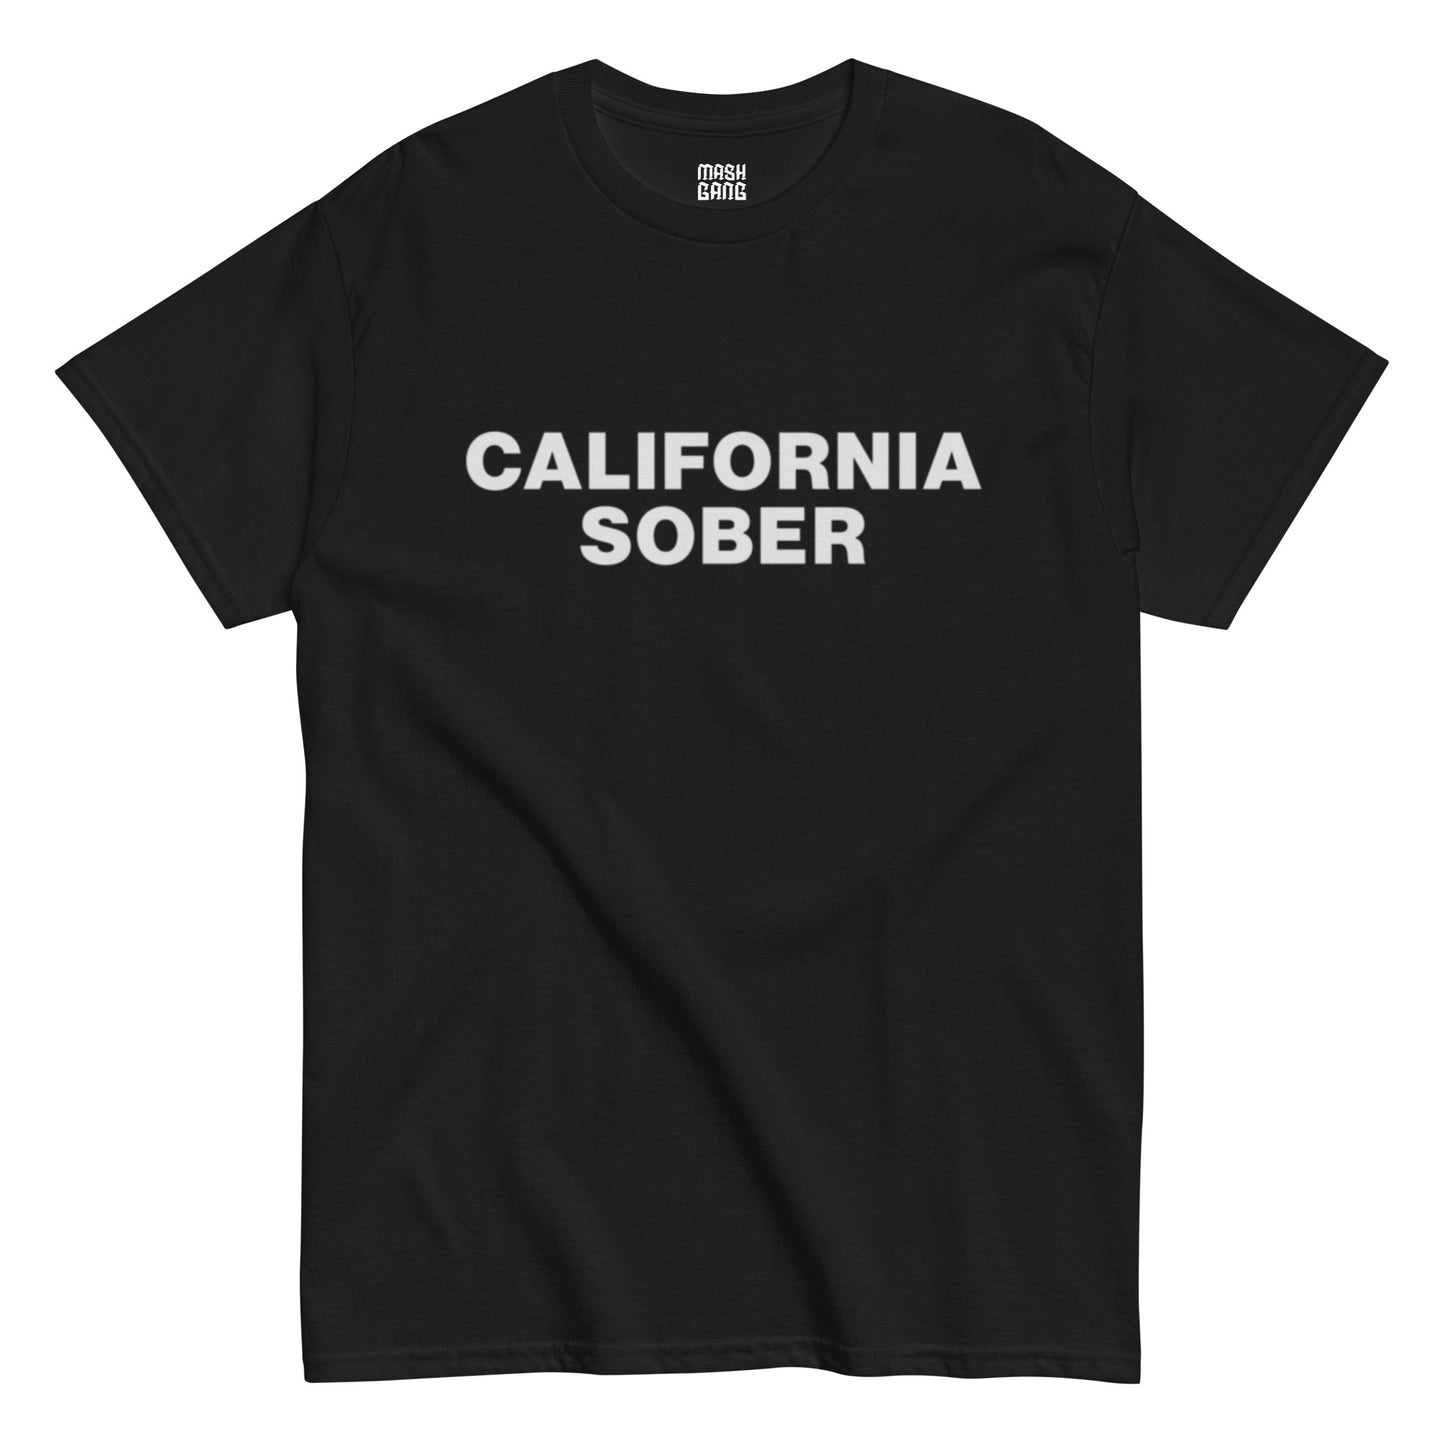 California Sober tee